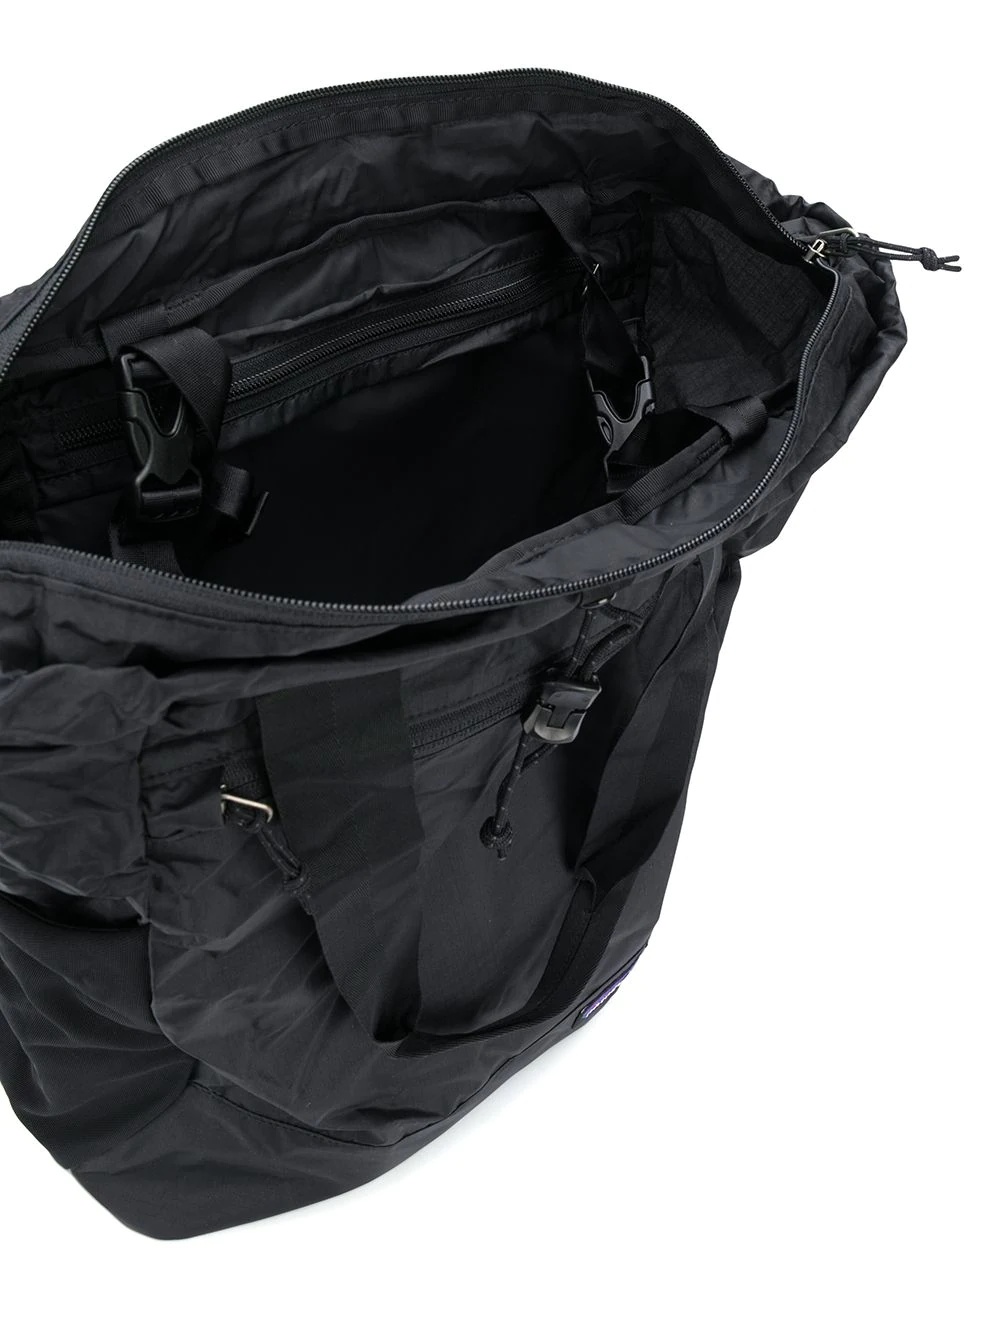 Black Hole backpack - 5